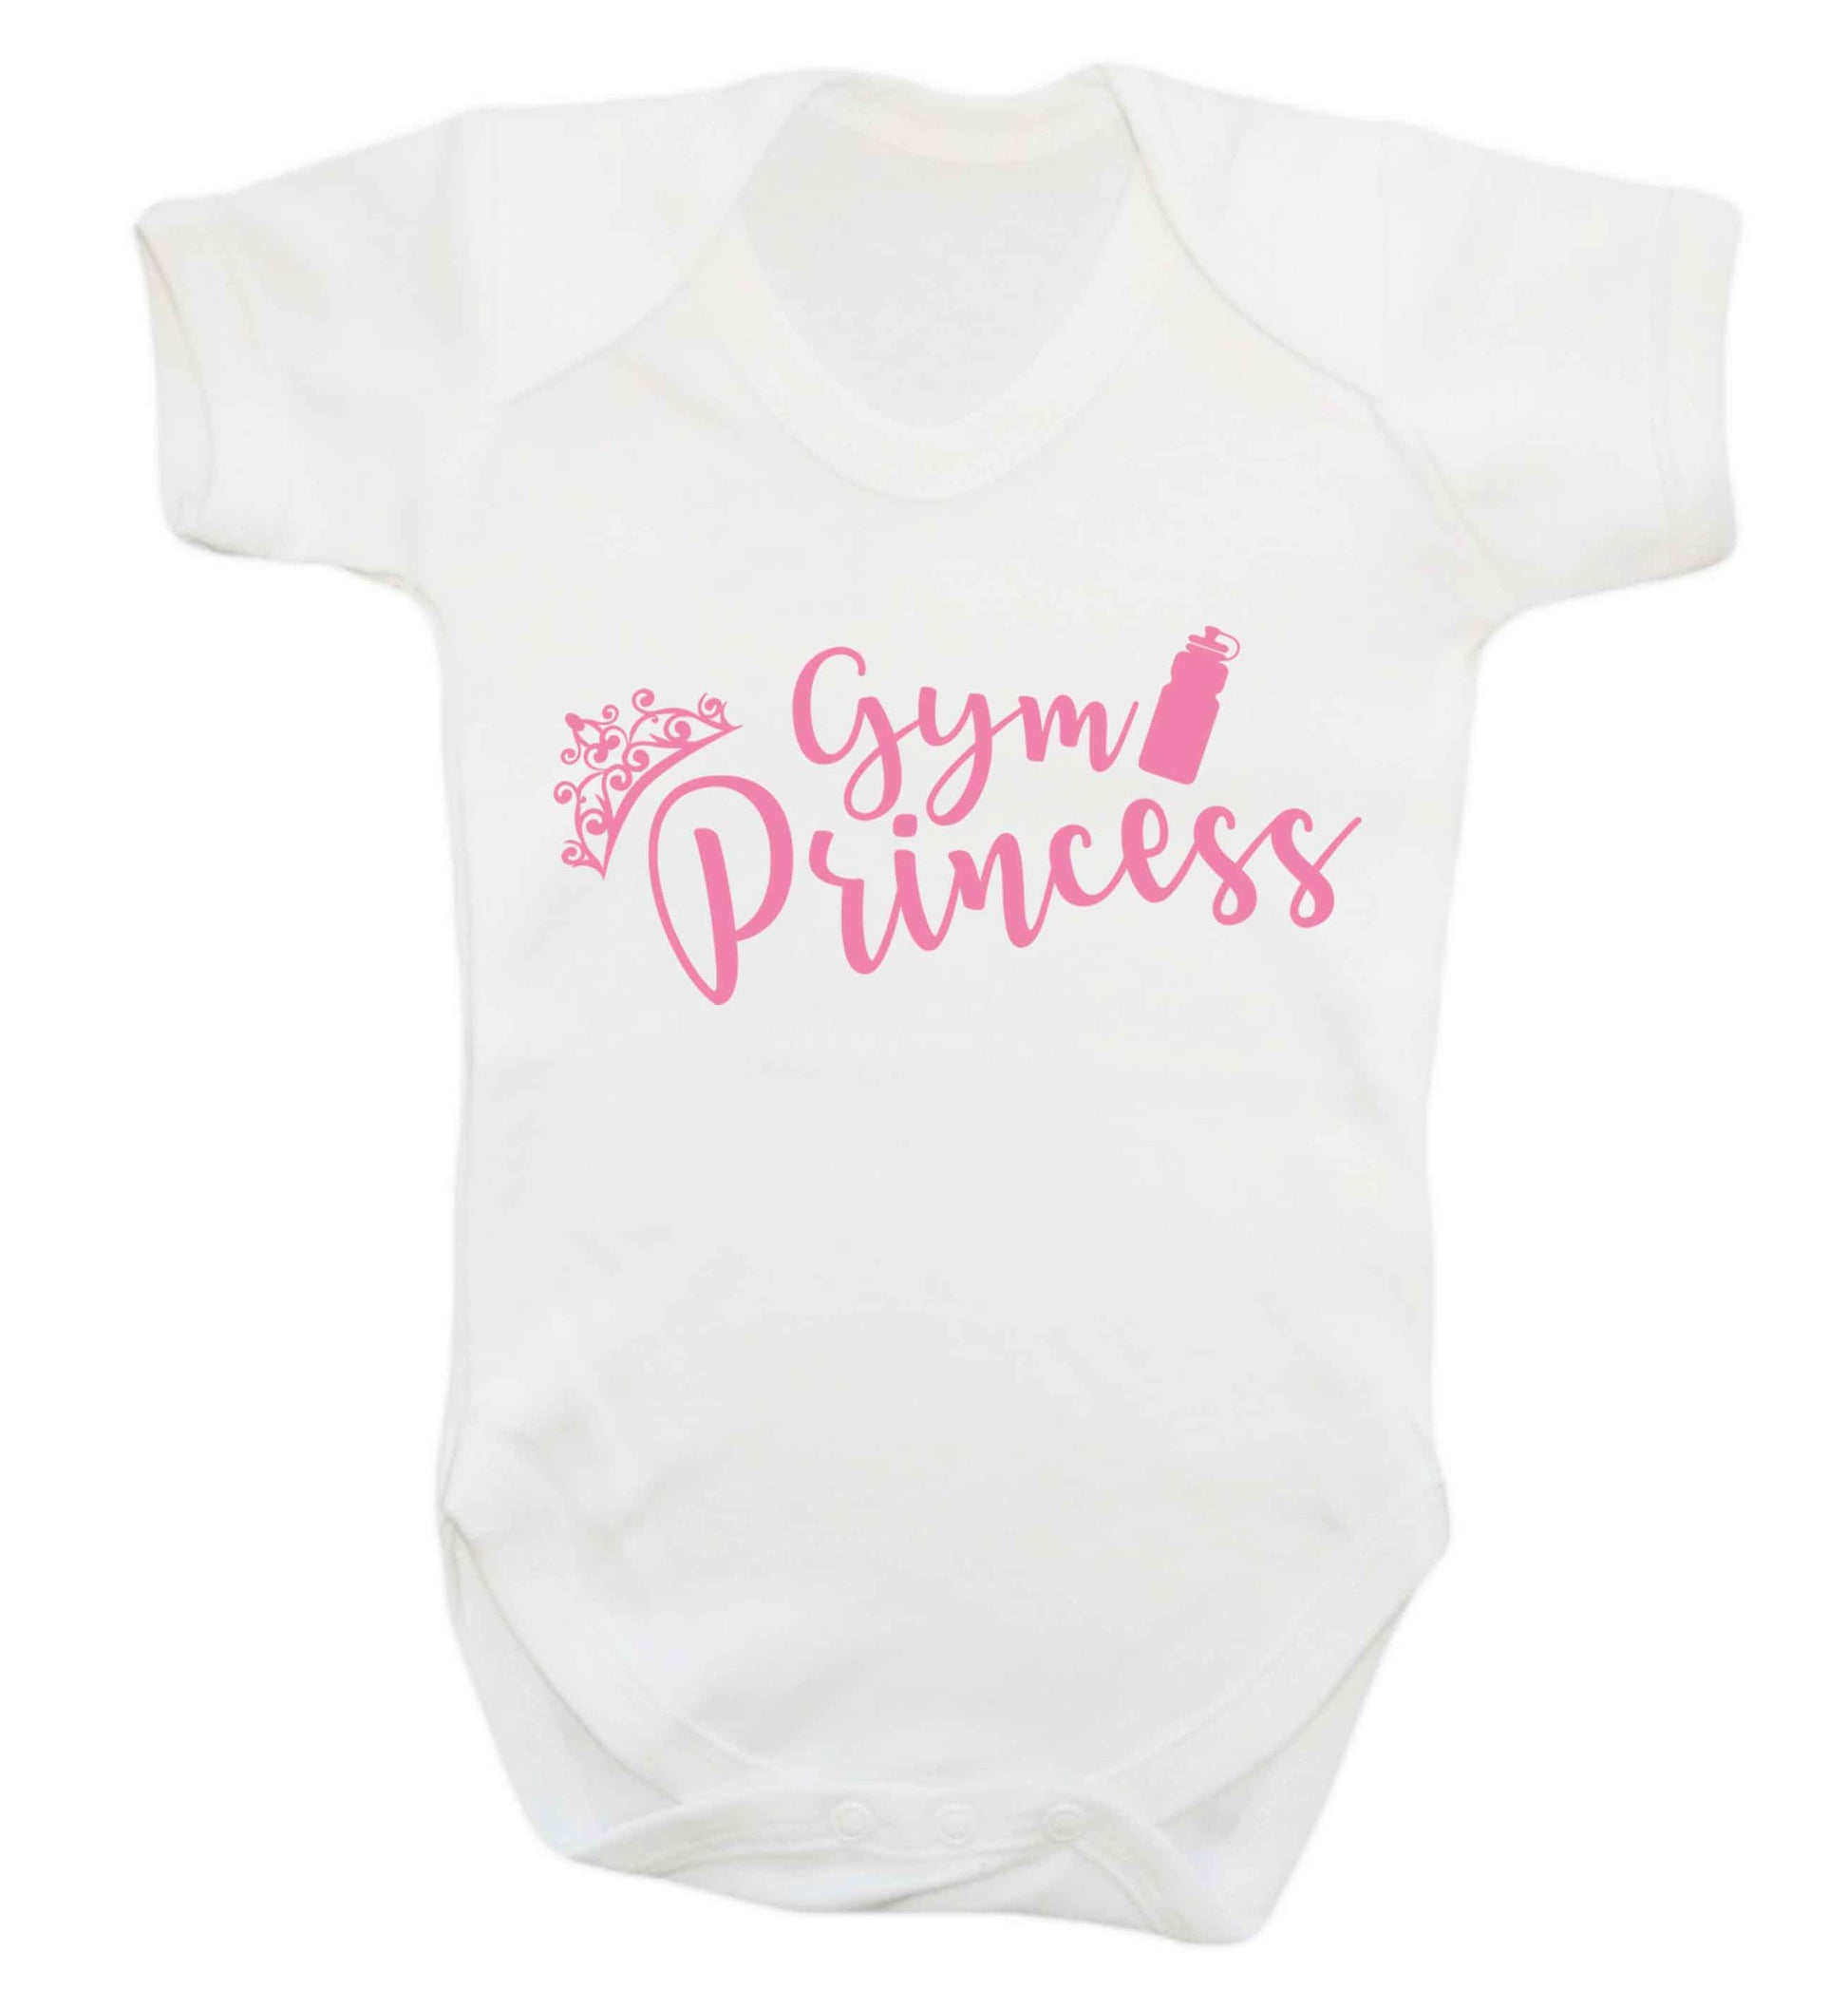 Gym princess Baby Vest white 18-24 months